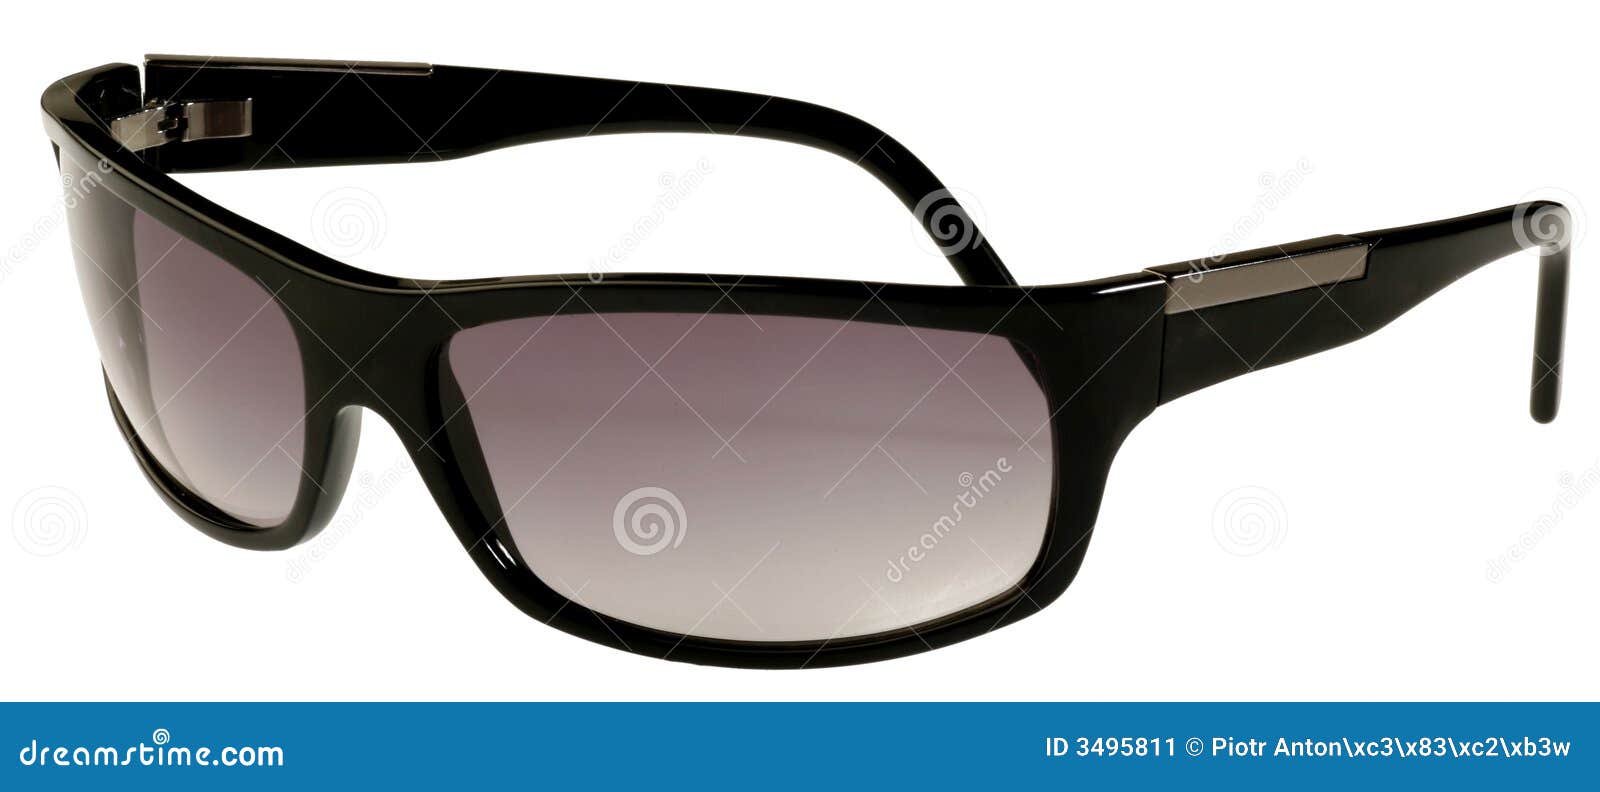 Sunglasses Stock Image Image Of Background Medical Frames 3495811